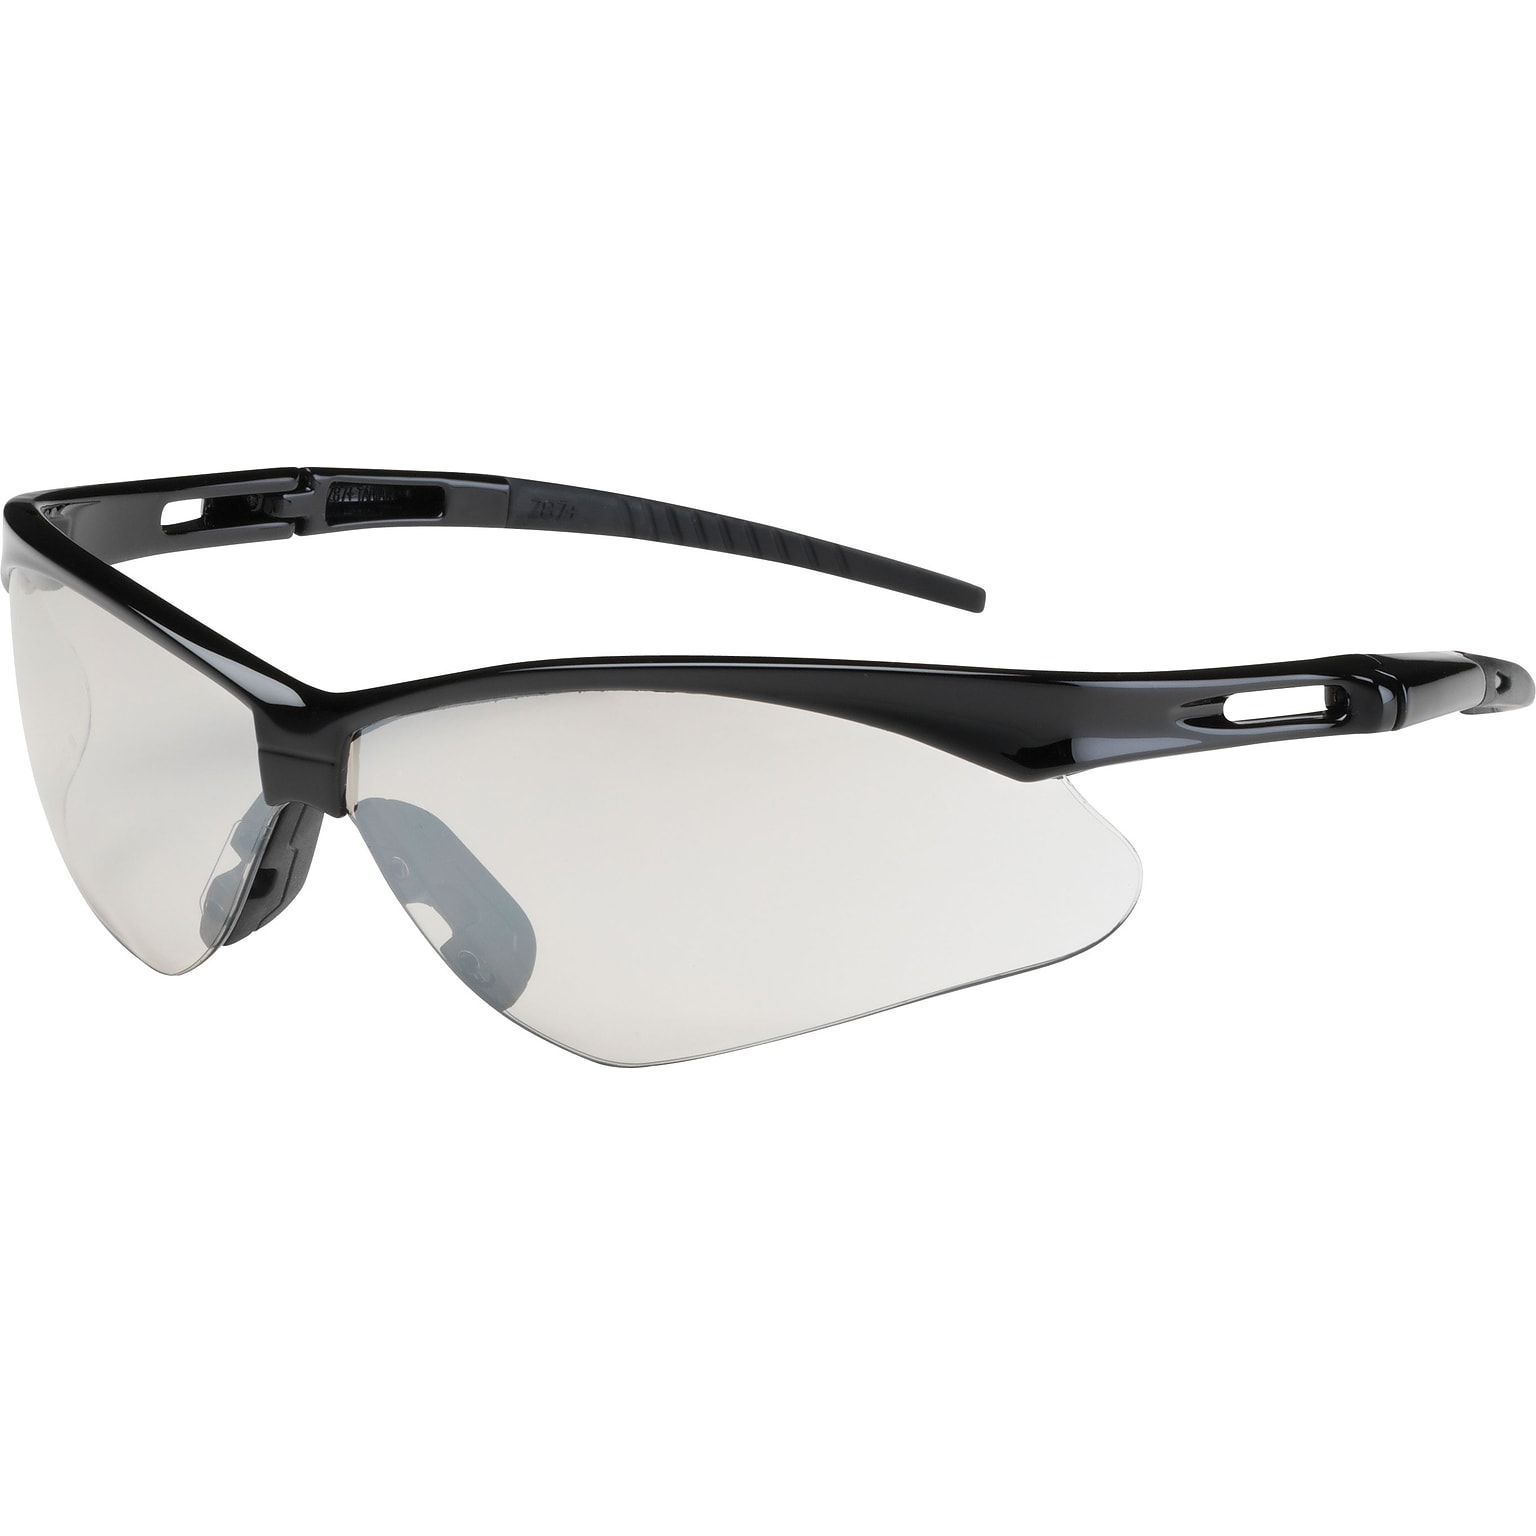 Bouton Optical Anser Safety Glasses, Black Frame, Indoor/Outdoor Lens, Anti-scratch Coating (250-AN-10114)